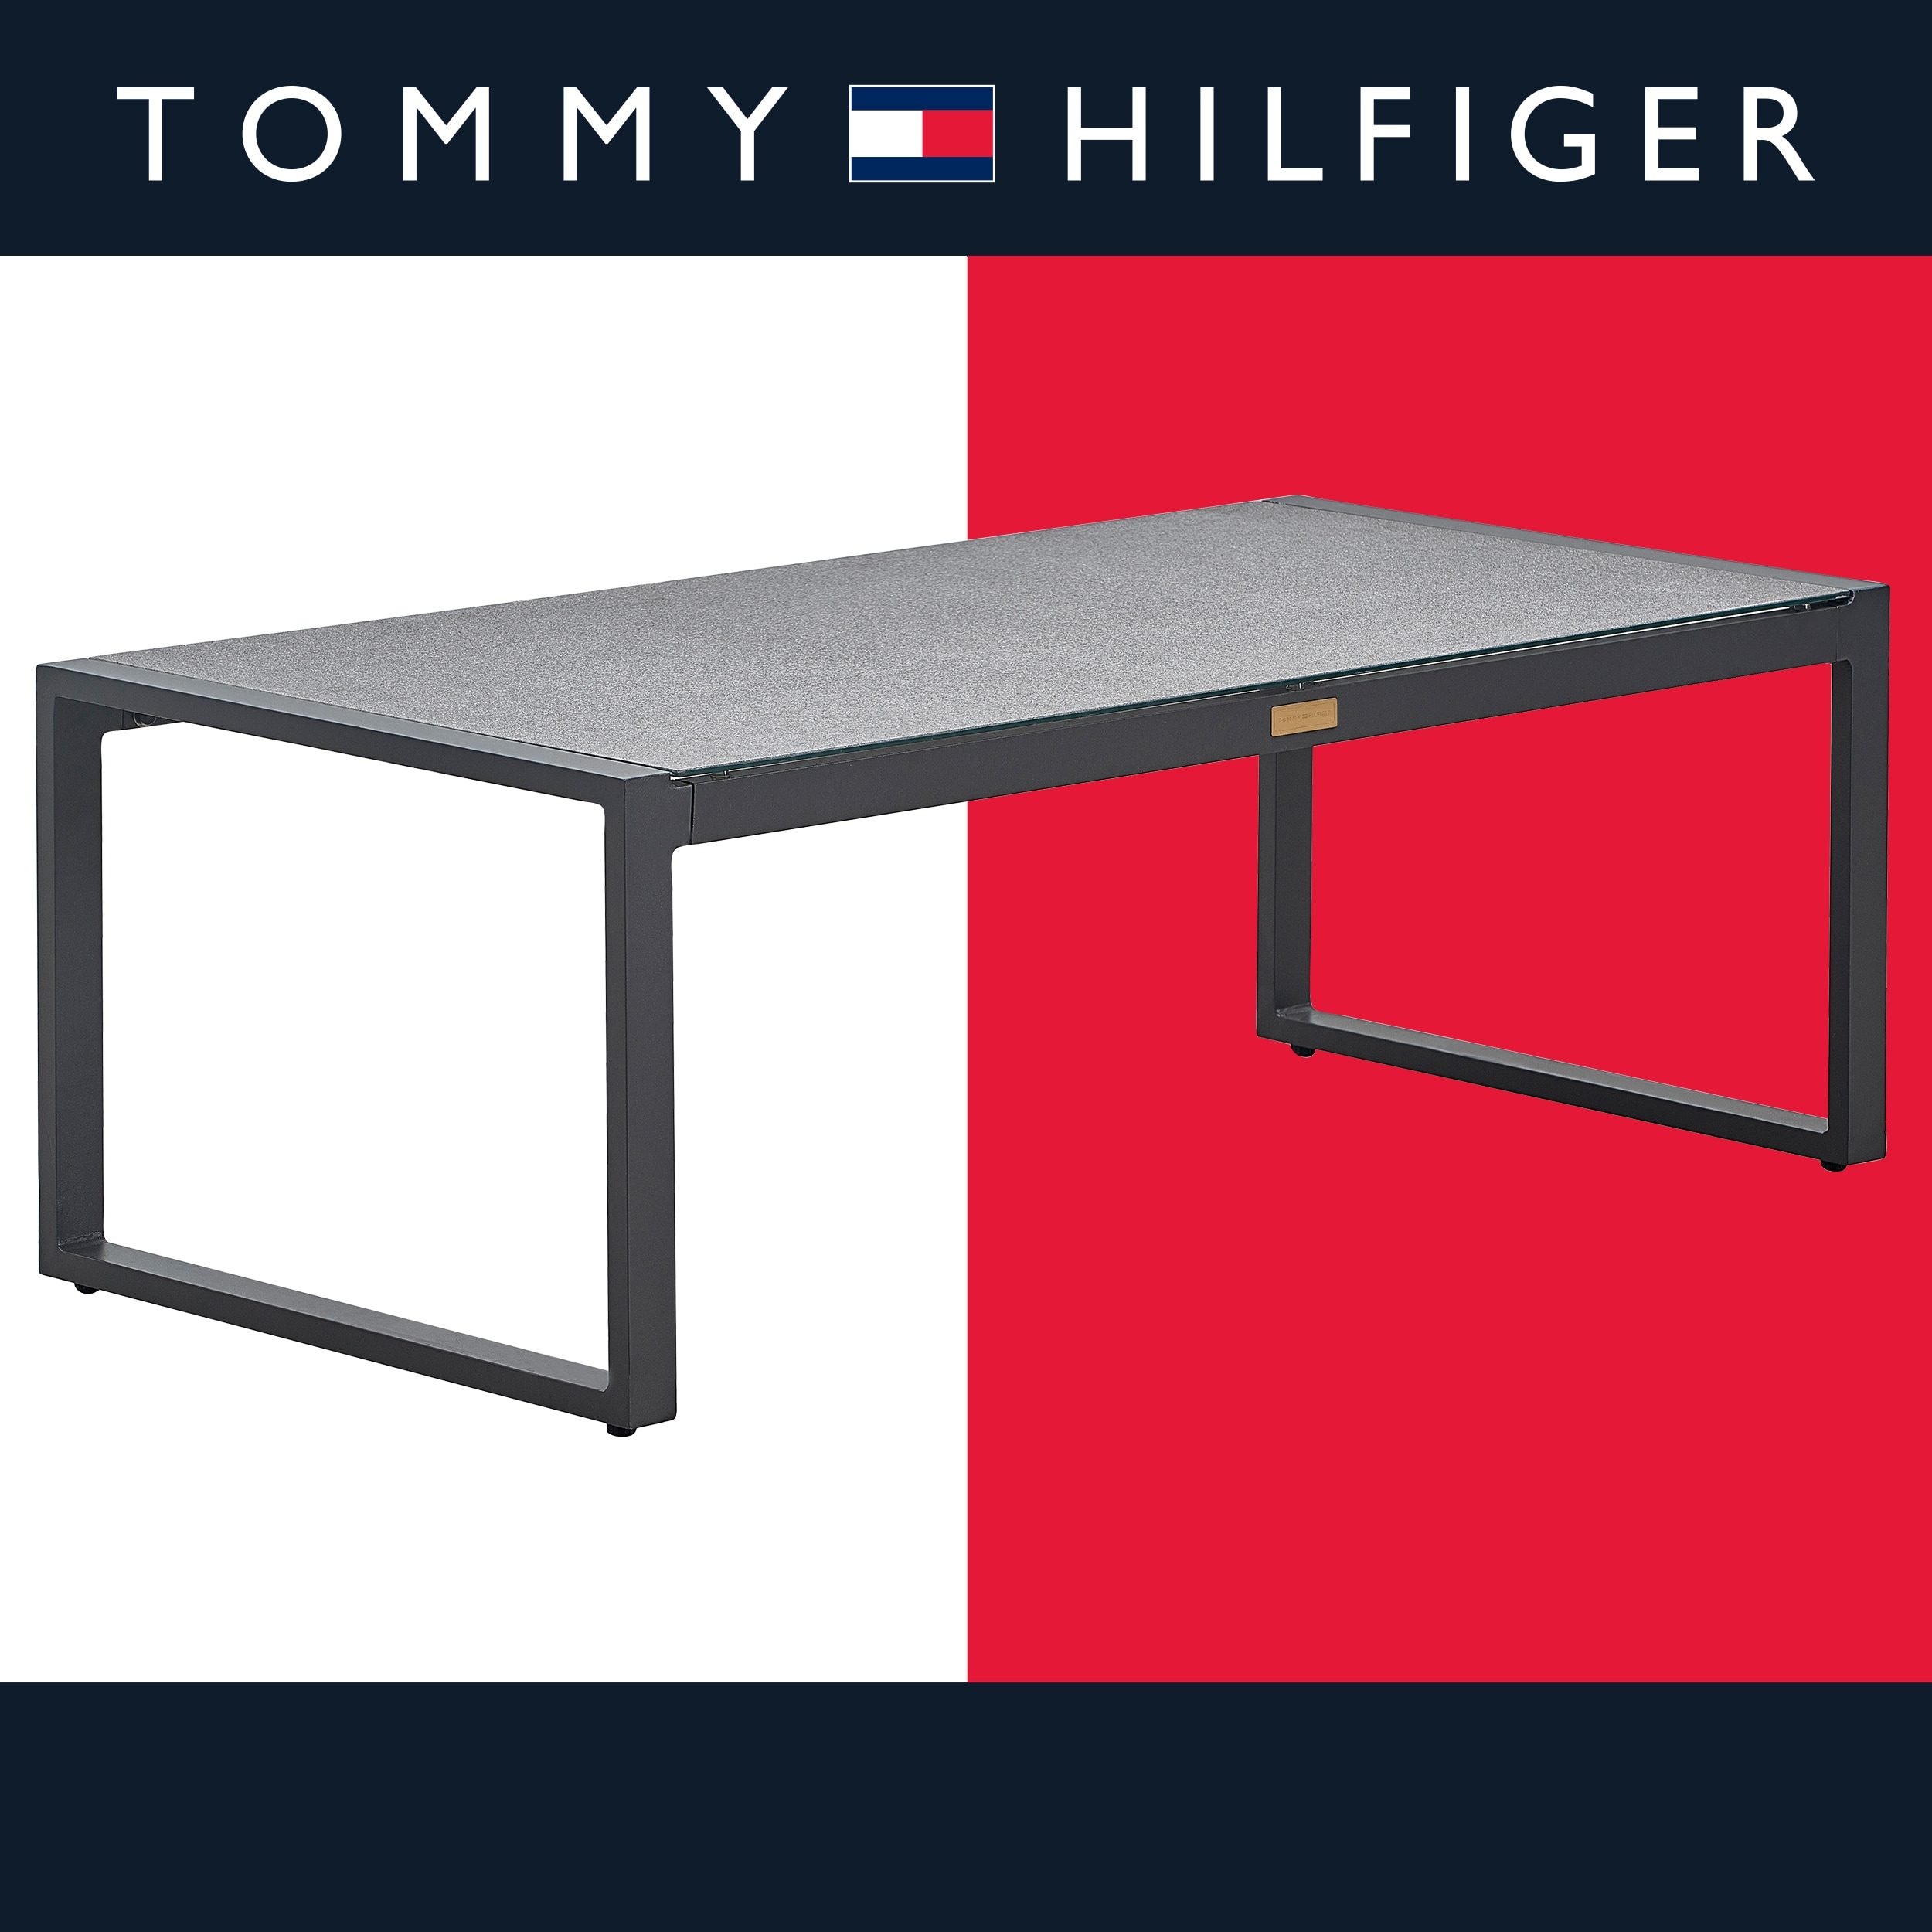 On Sale Tommy Hilfiger Patio Furniture - Bed Bath & Beyond